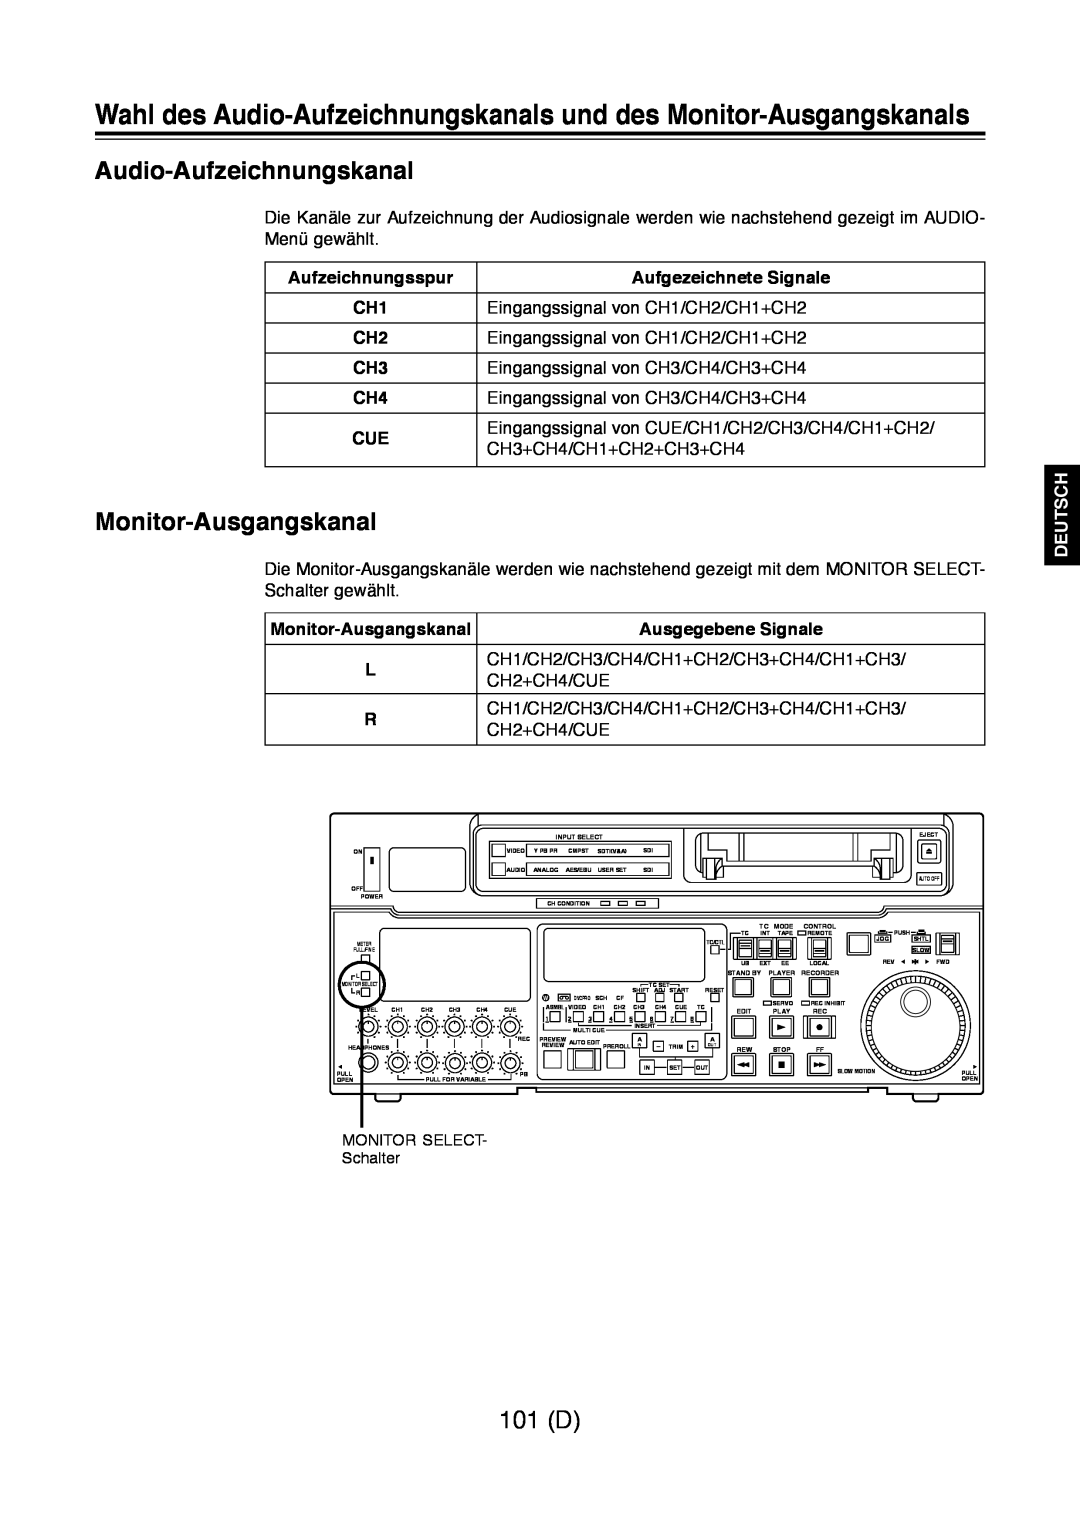 Panasonic AJ-D960 Audio-Aufzeichnungskanal, Monitor-Ausgangskanal, 101 D, Aufzeichnungsspur, Aufgezeichnete Signale 